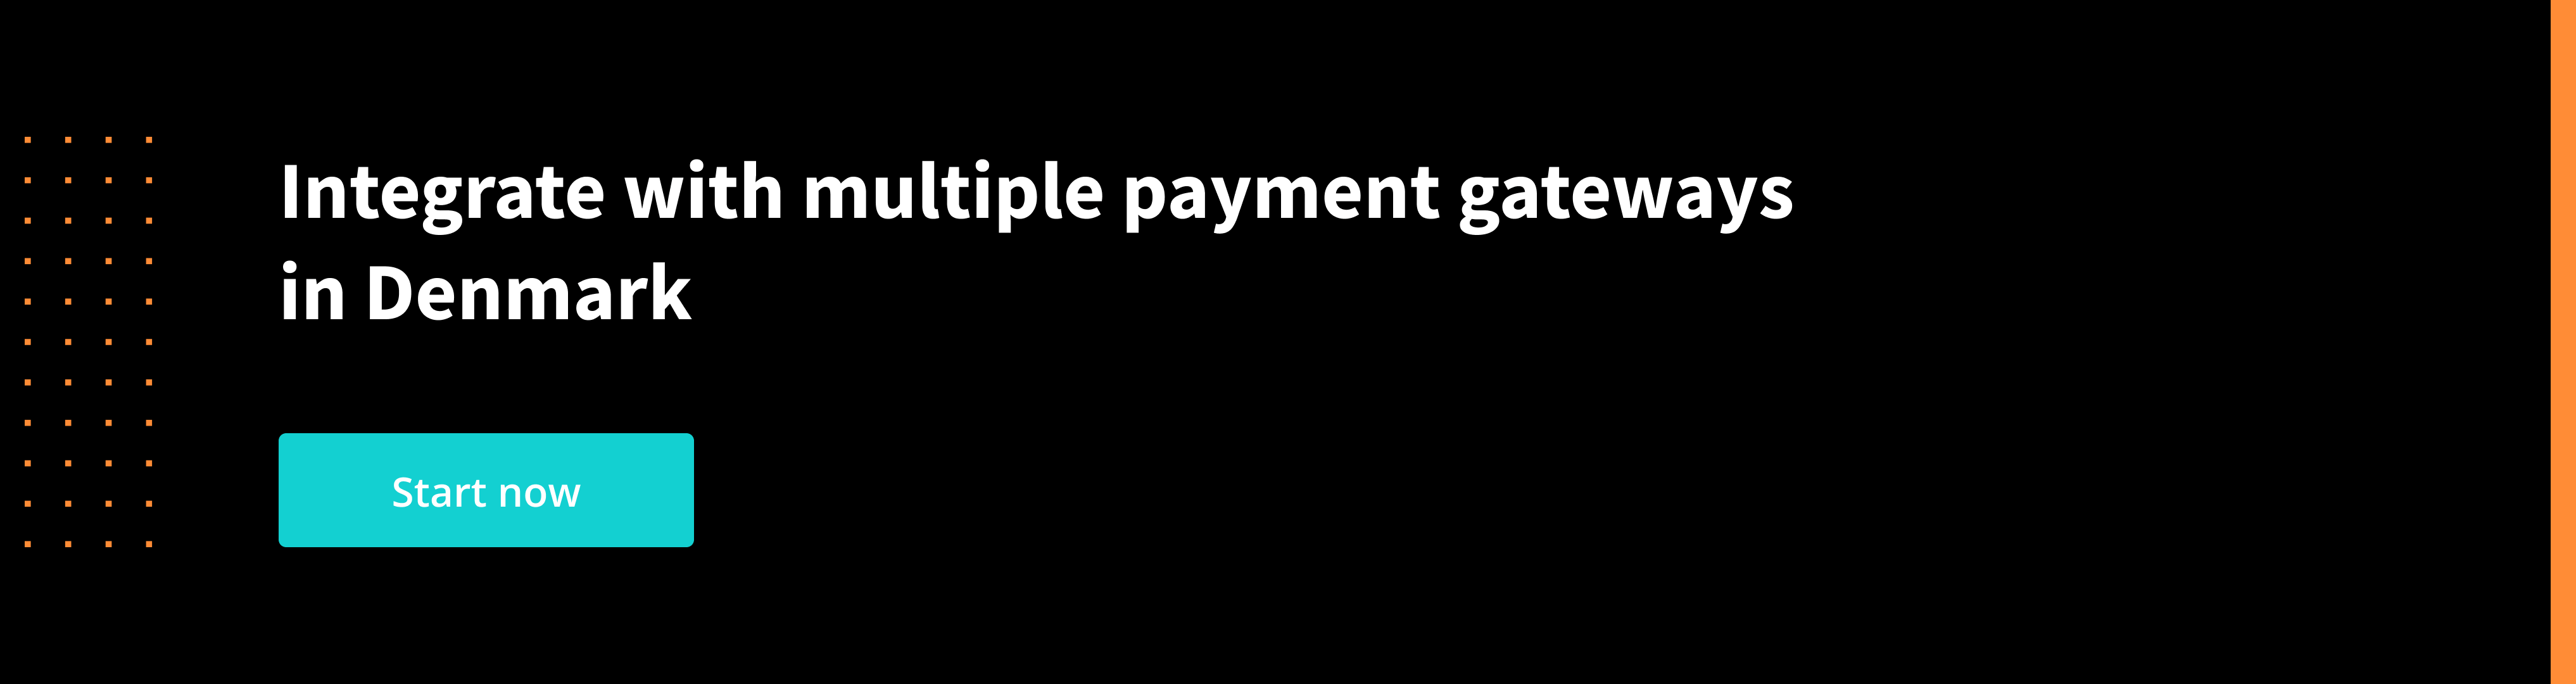 Top payment gateway in Denmark